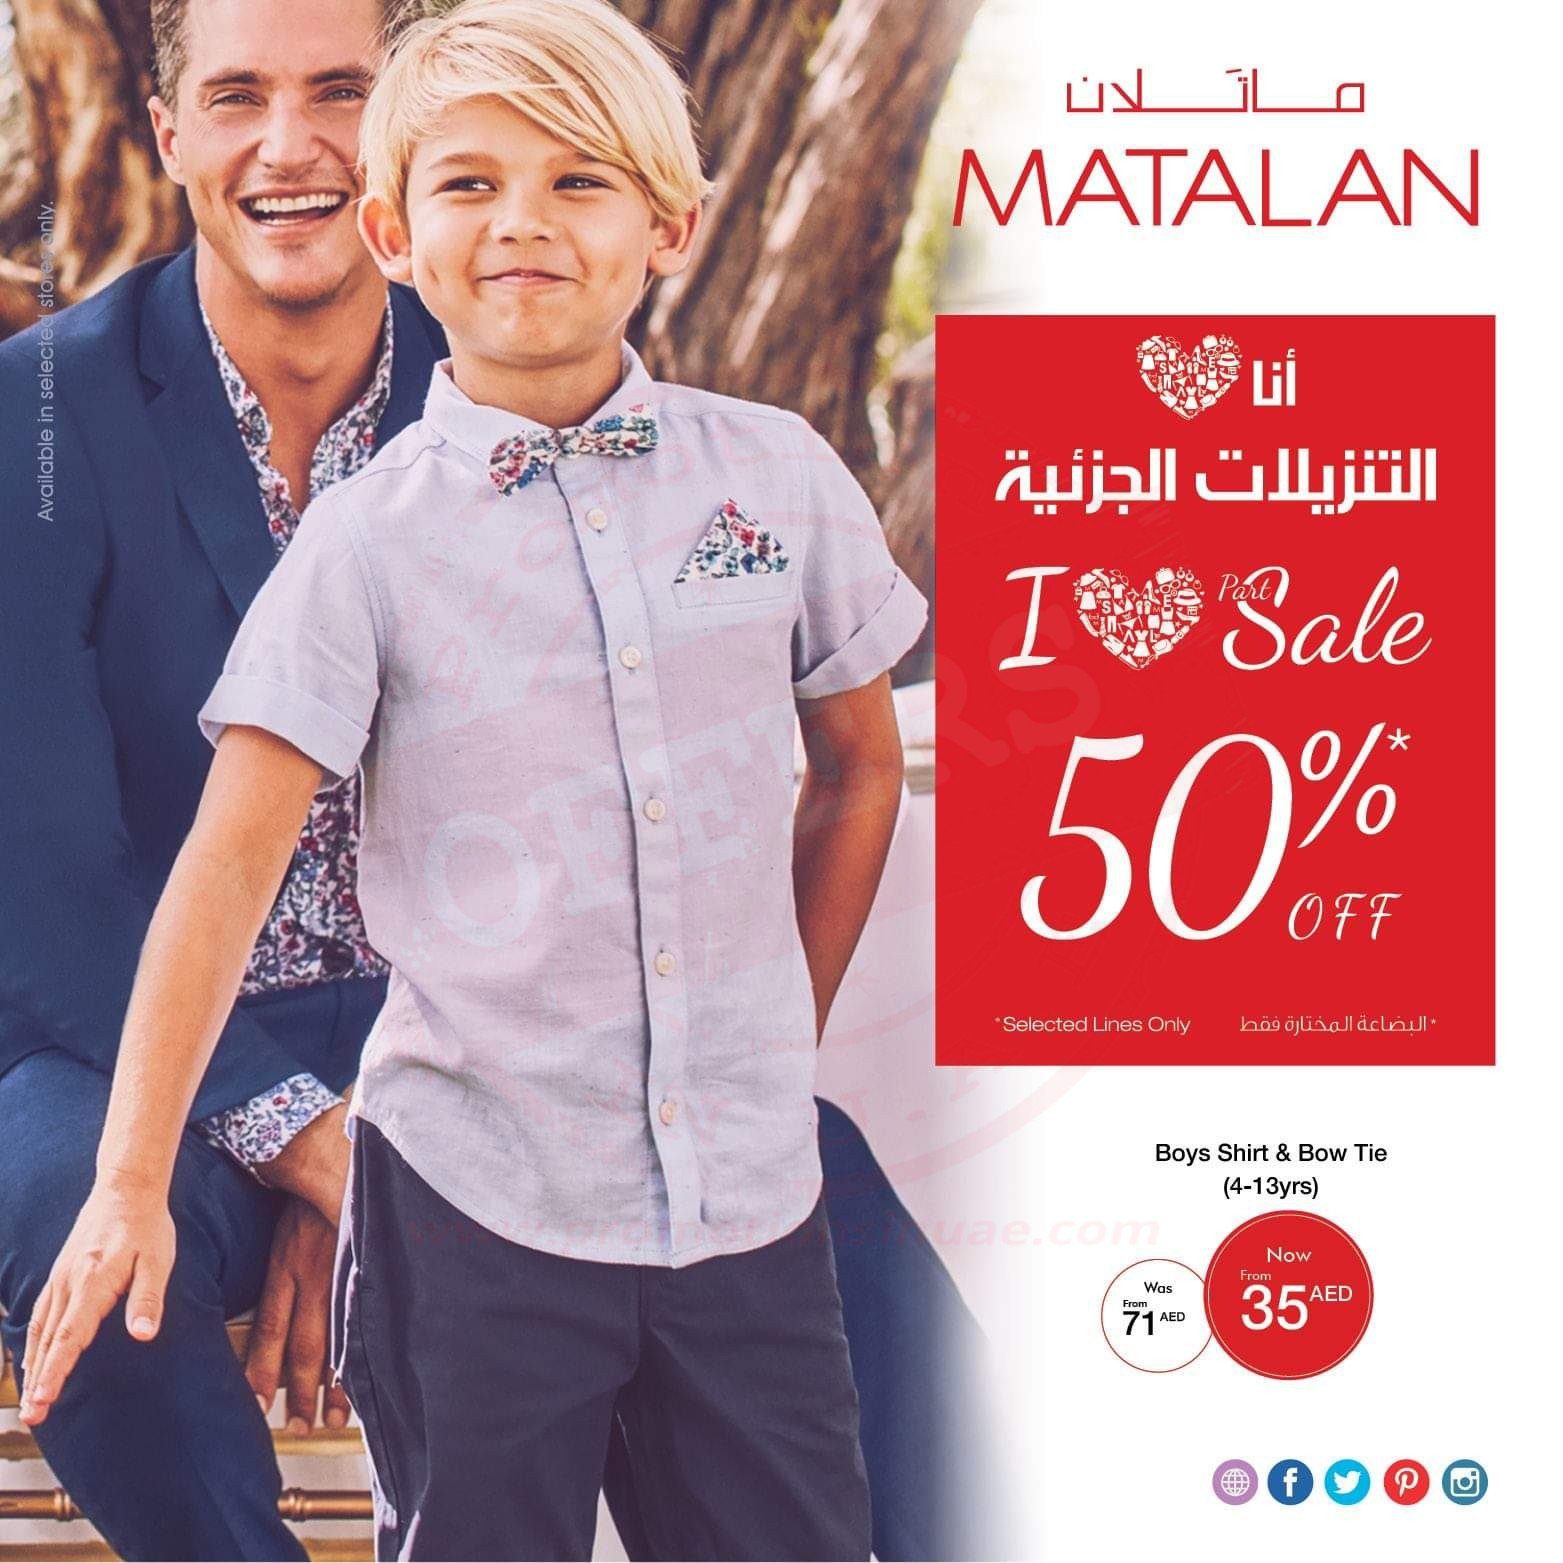 Biggest Sale -50% Off at Matalan